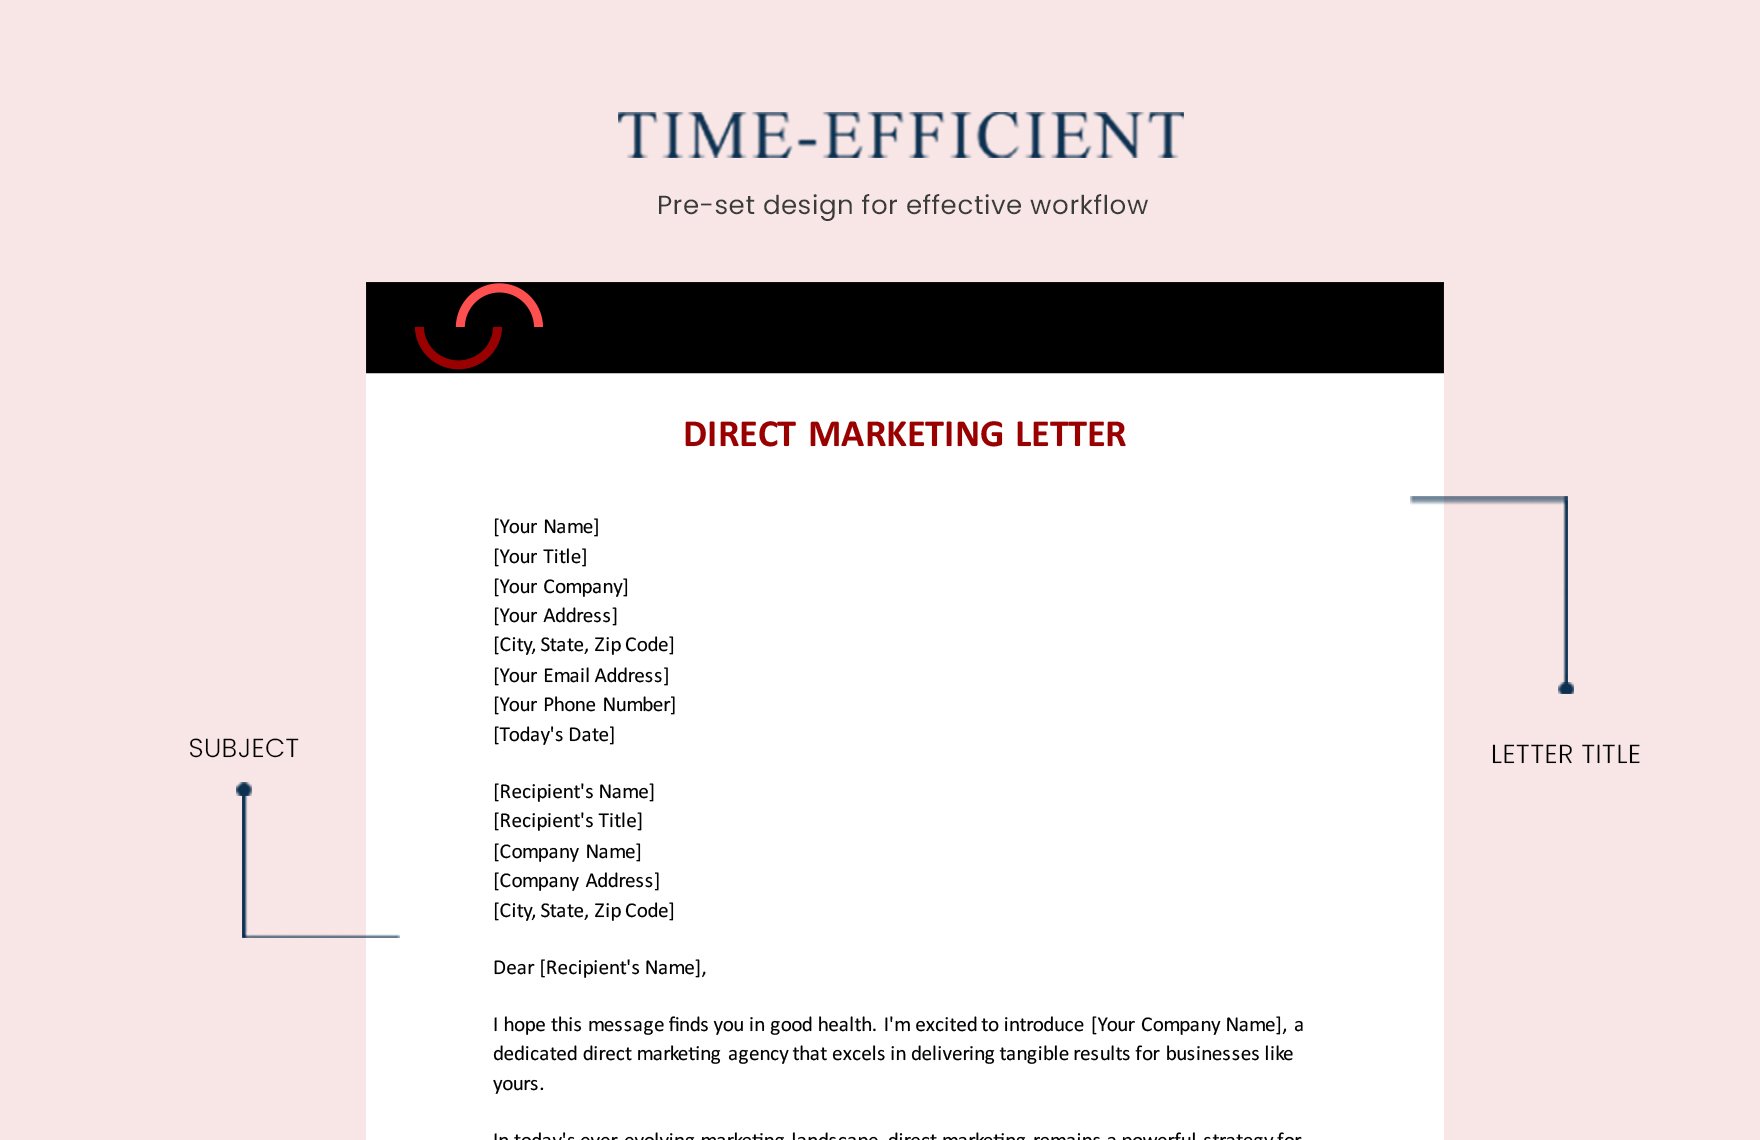 Direct Marketing Letter